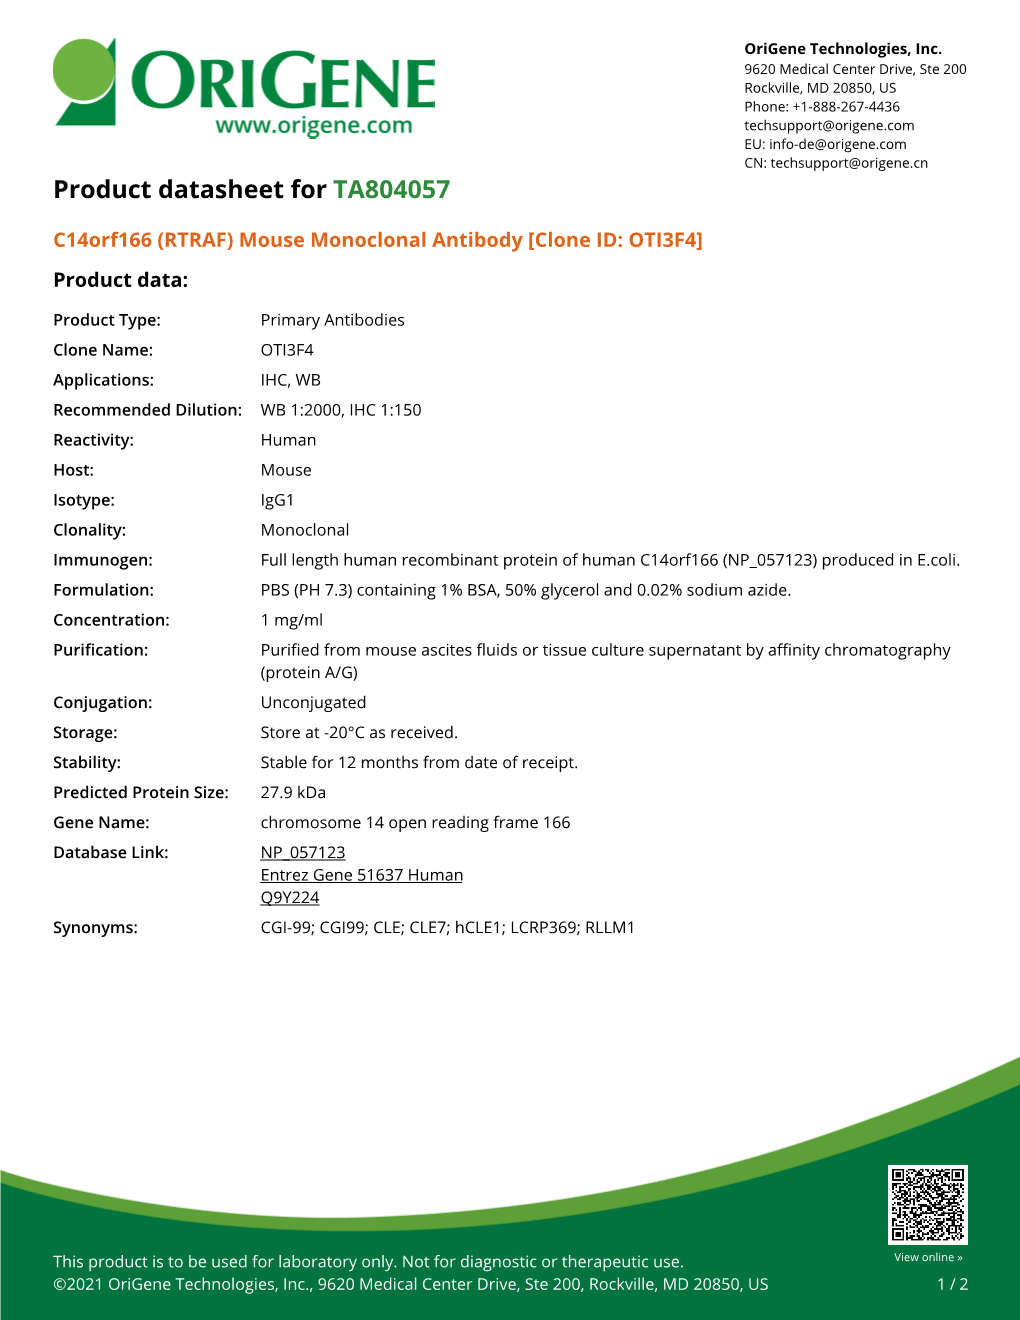 C14orf166 (RTRAF) Mouse Monoclonal Antibody [Clone ID: OTI3F4] Product Data